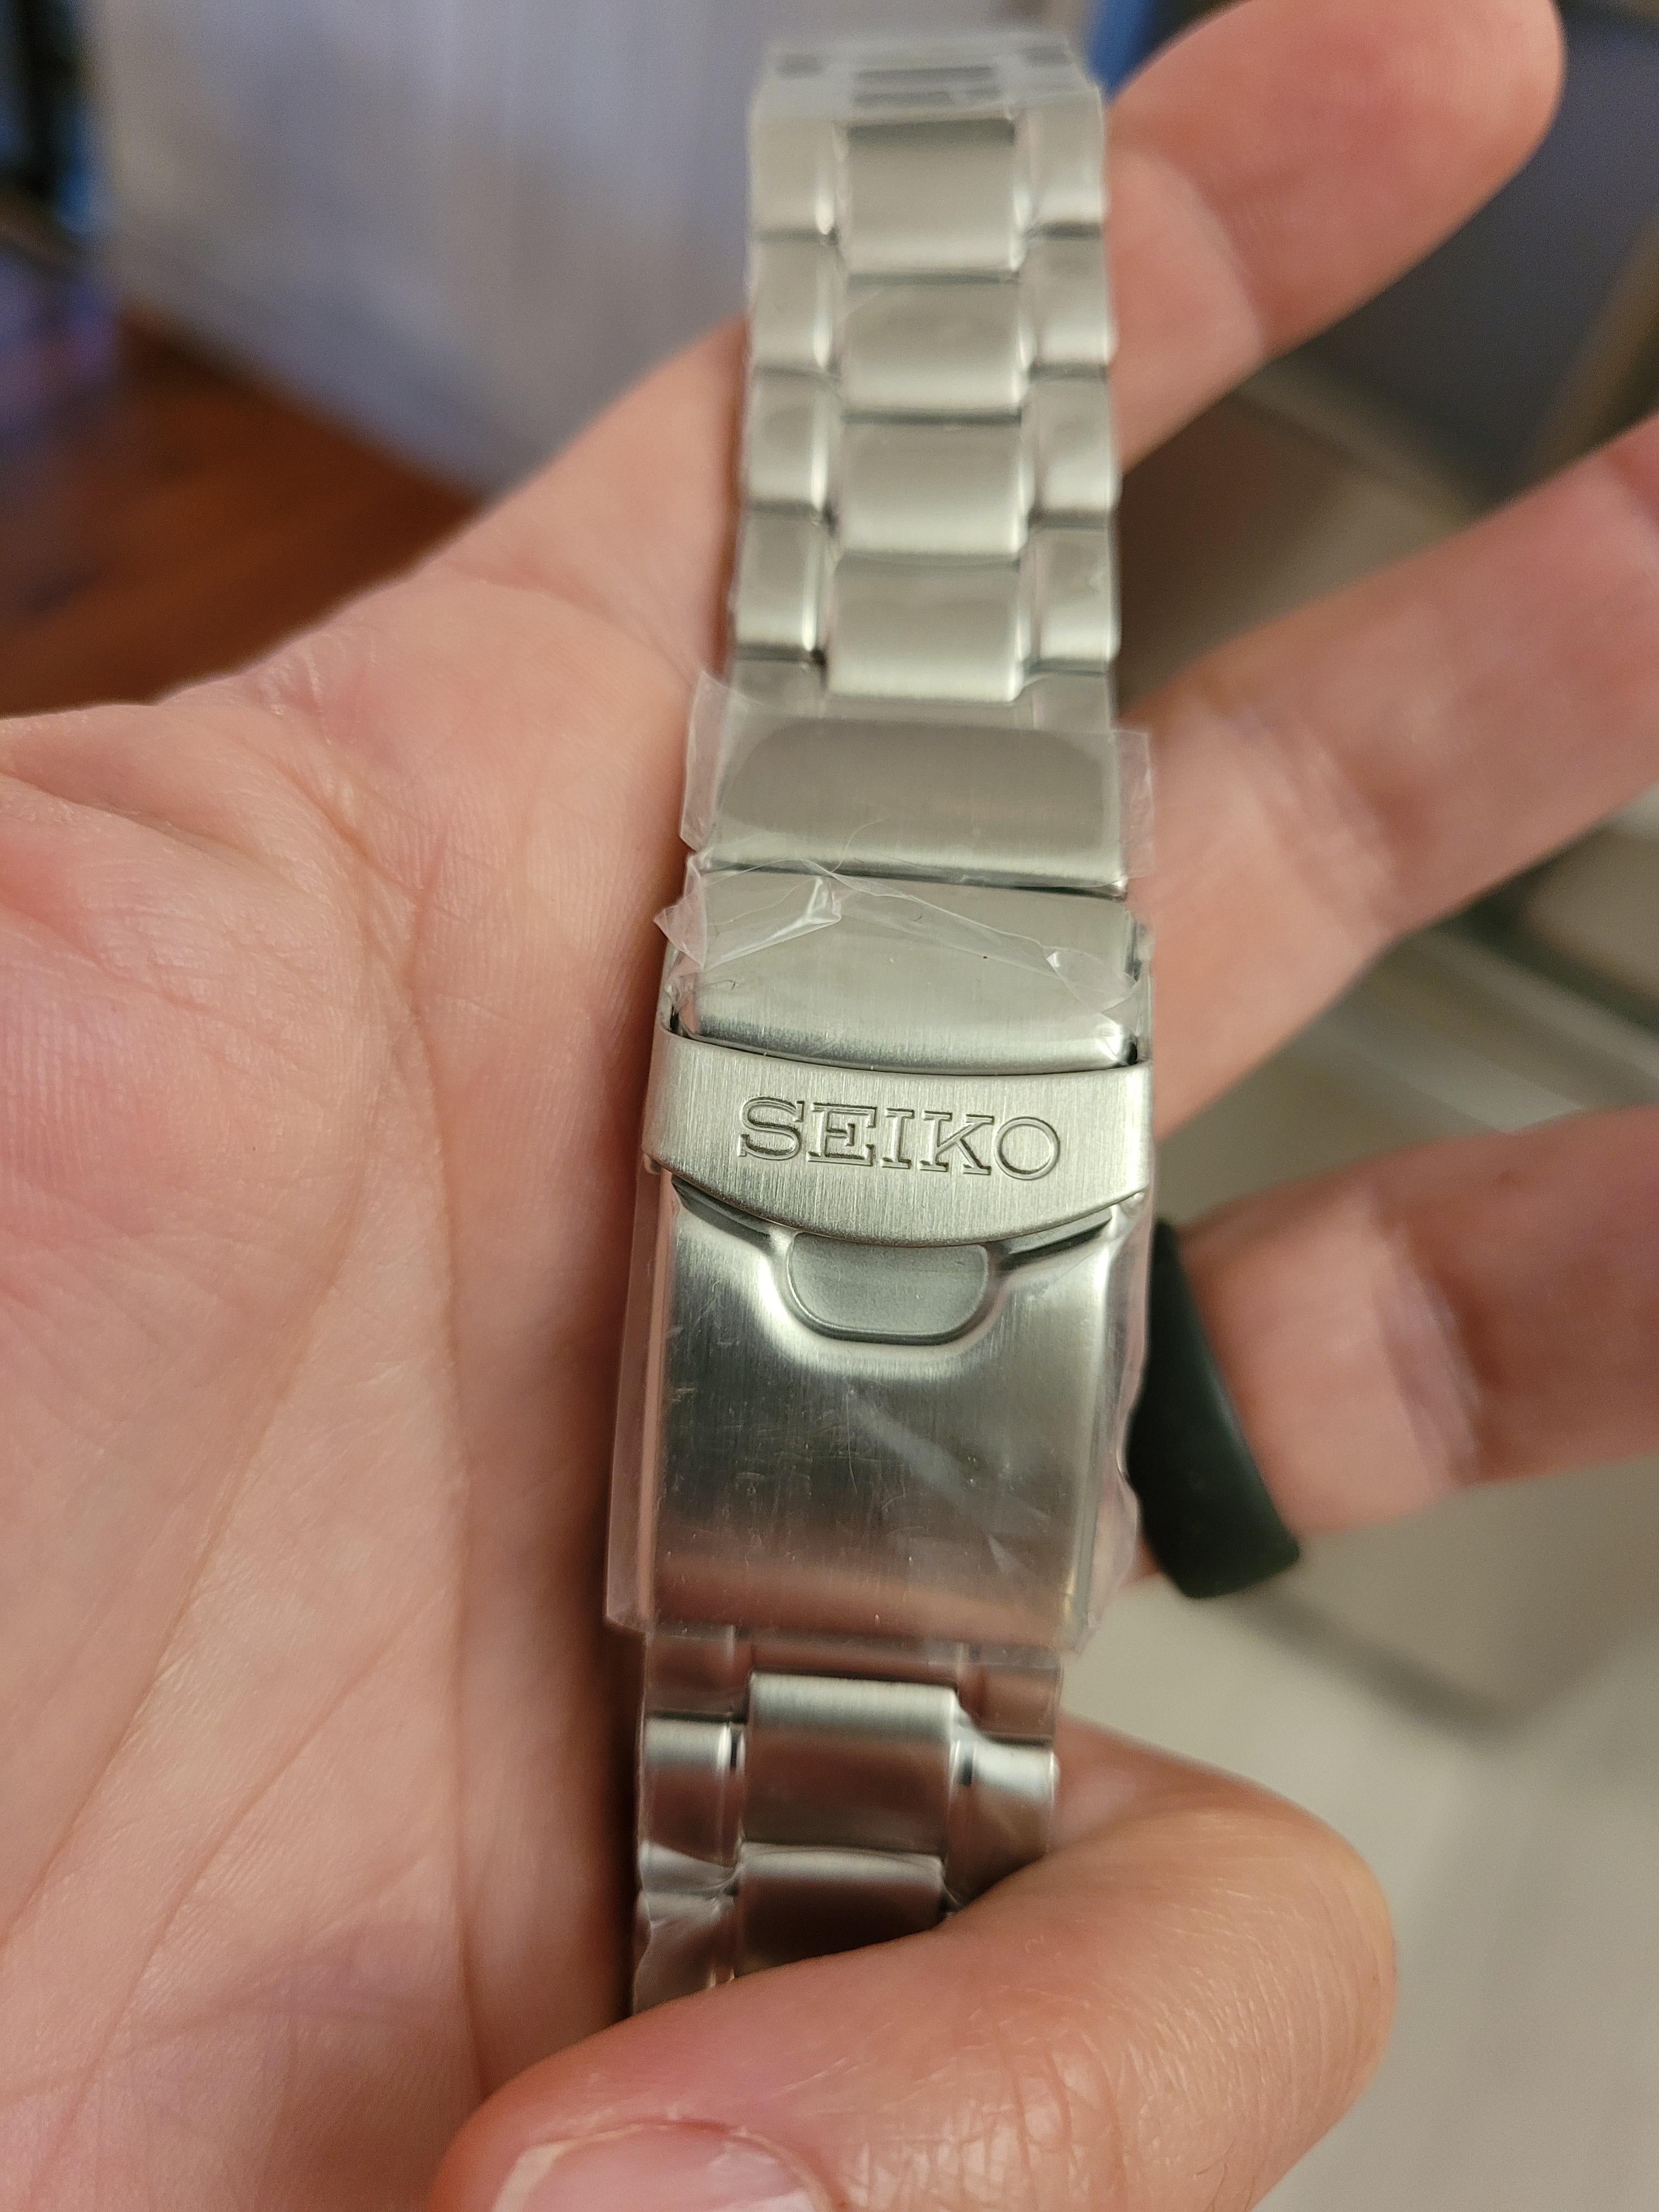 SOLD OEM Seiko Turtle bracelet cheap